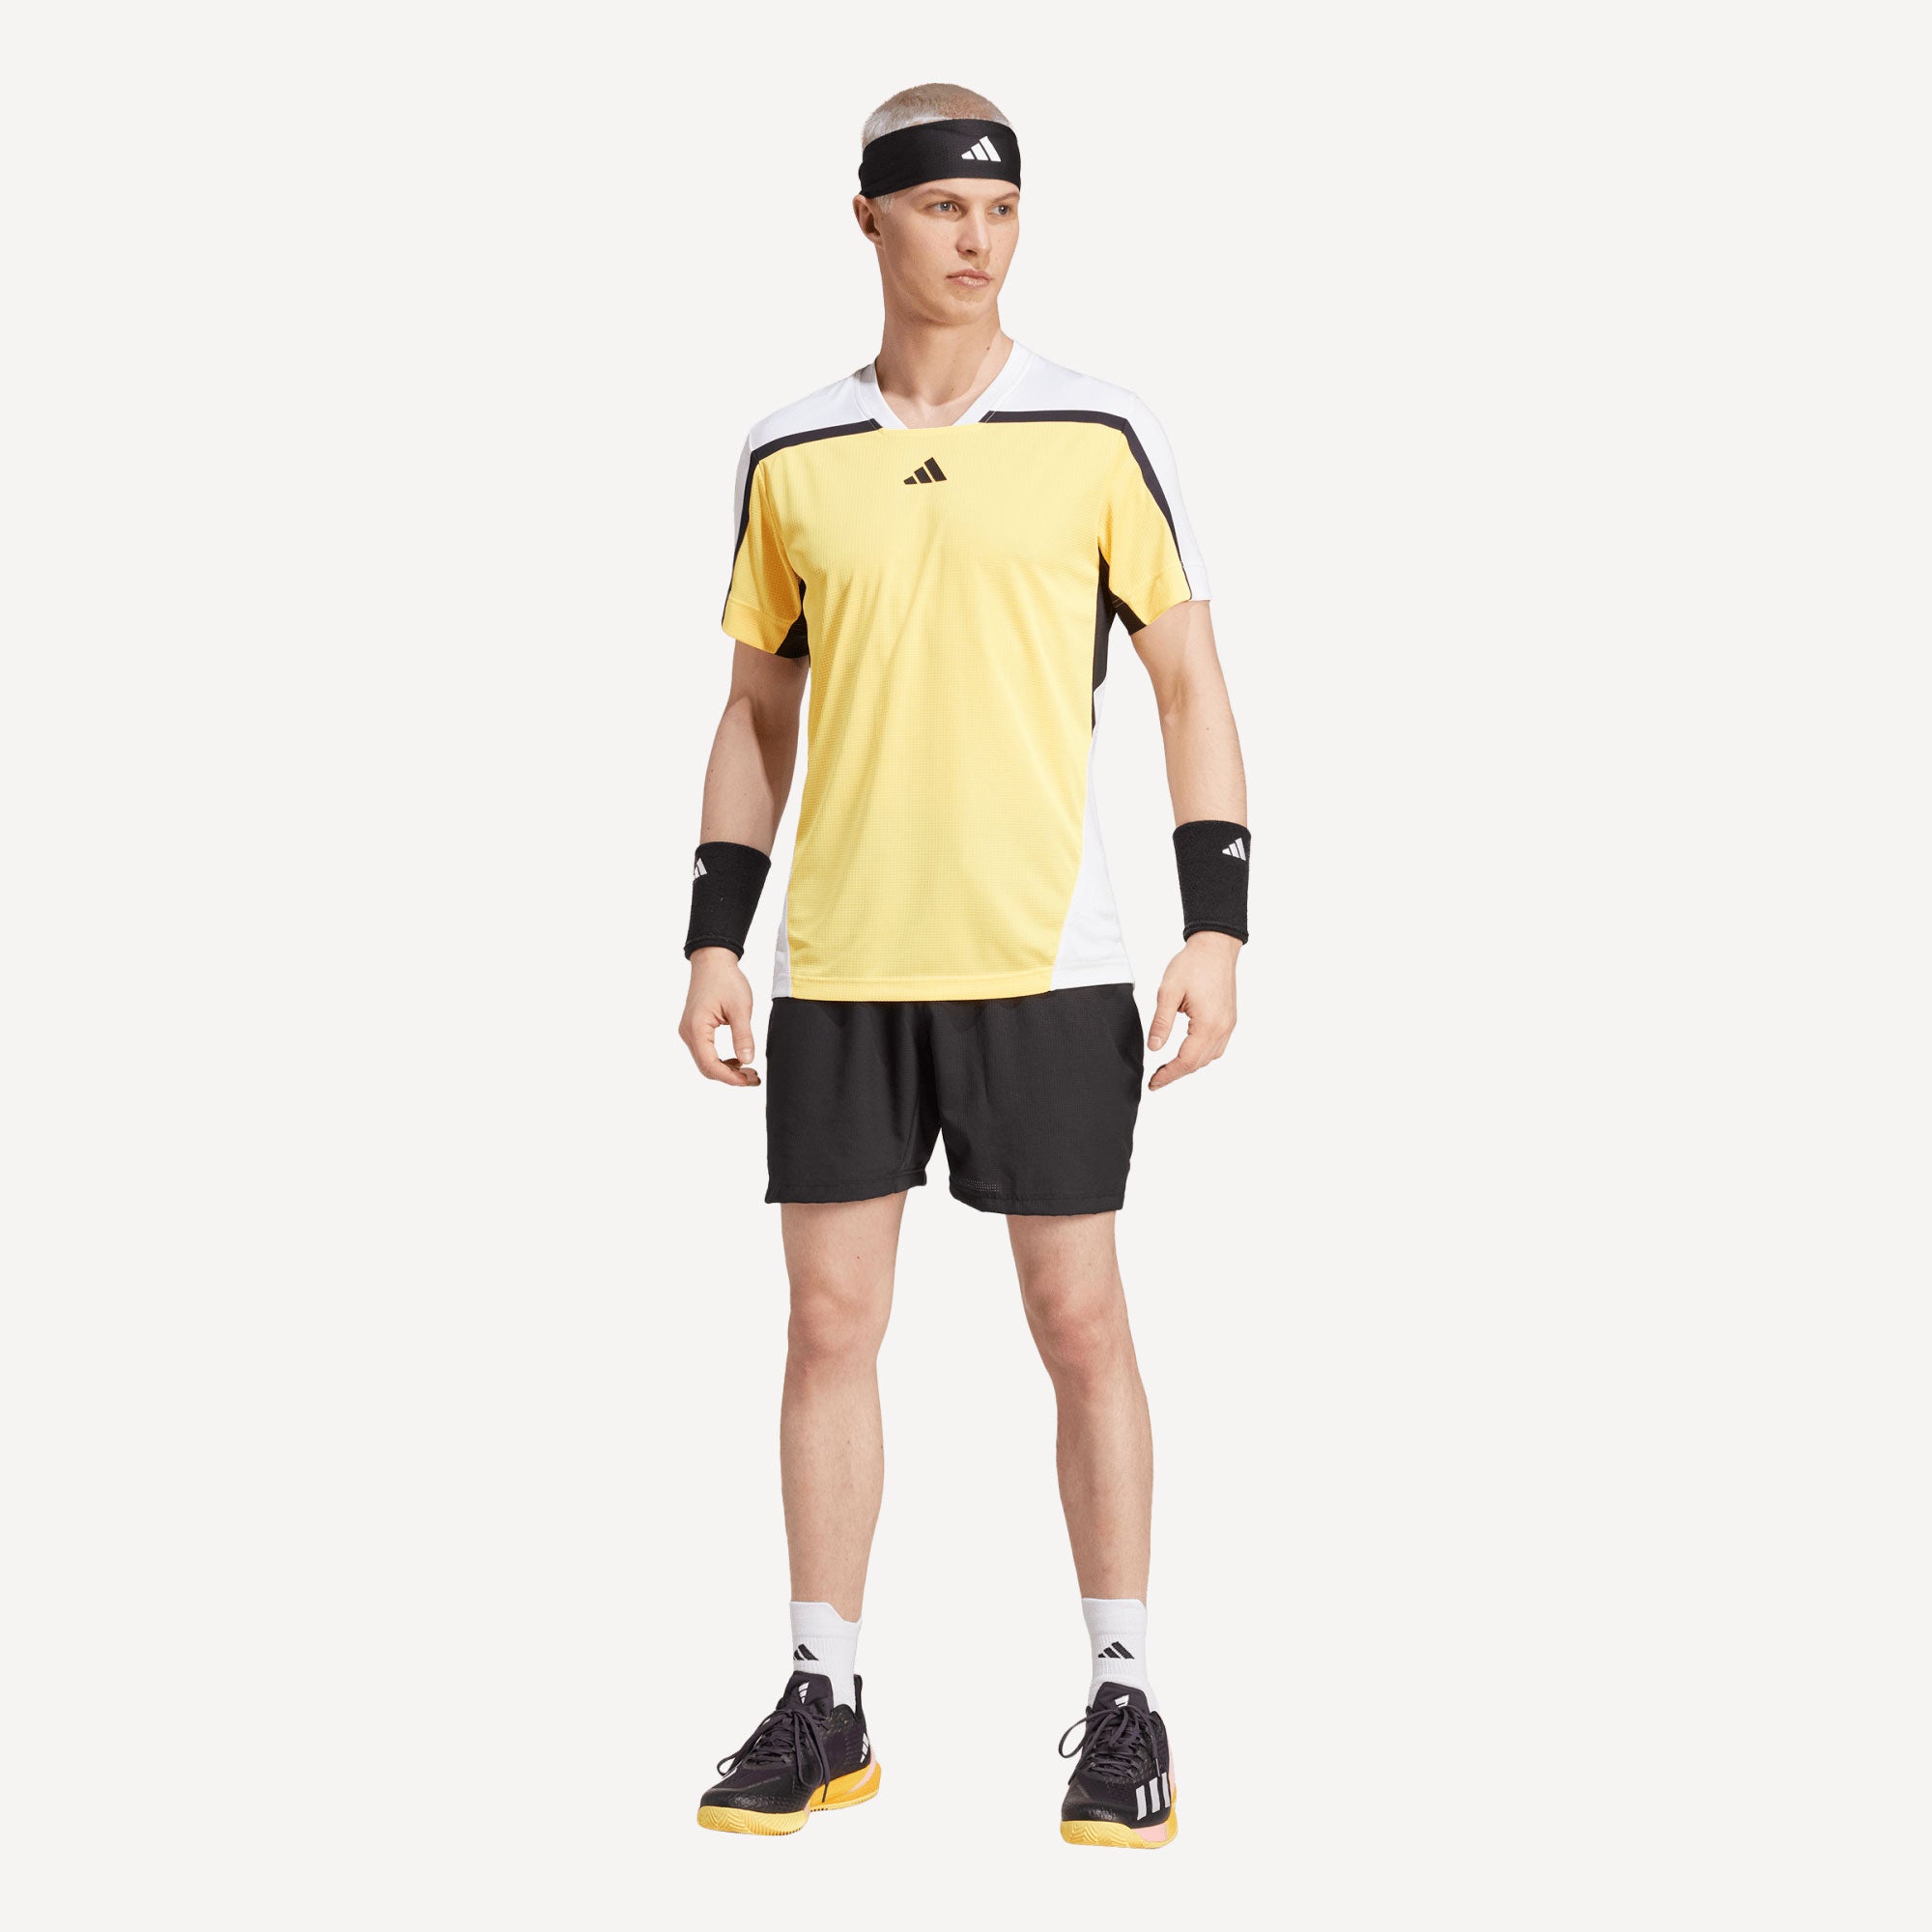 adidas Pro Paris Men's Tennis Shirt - Orange (4)